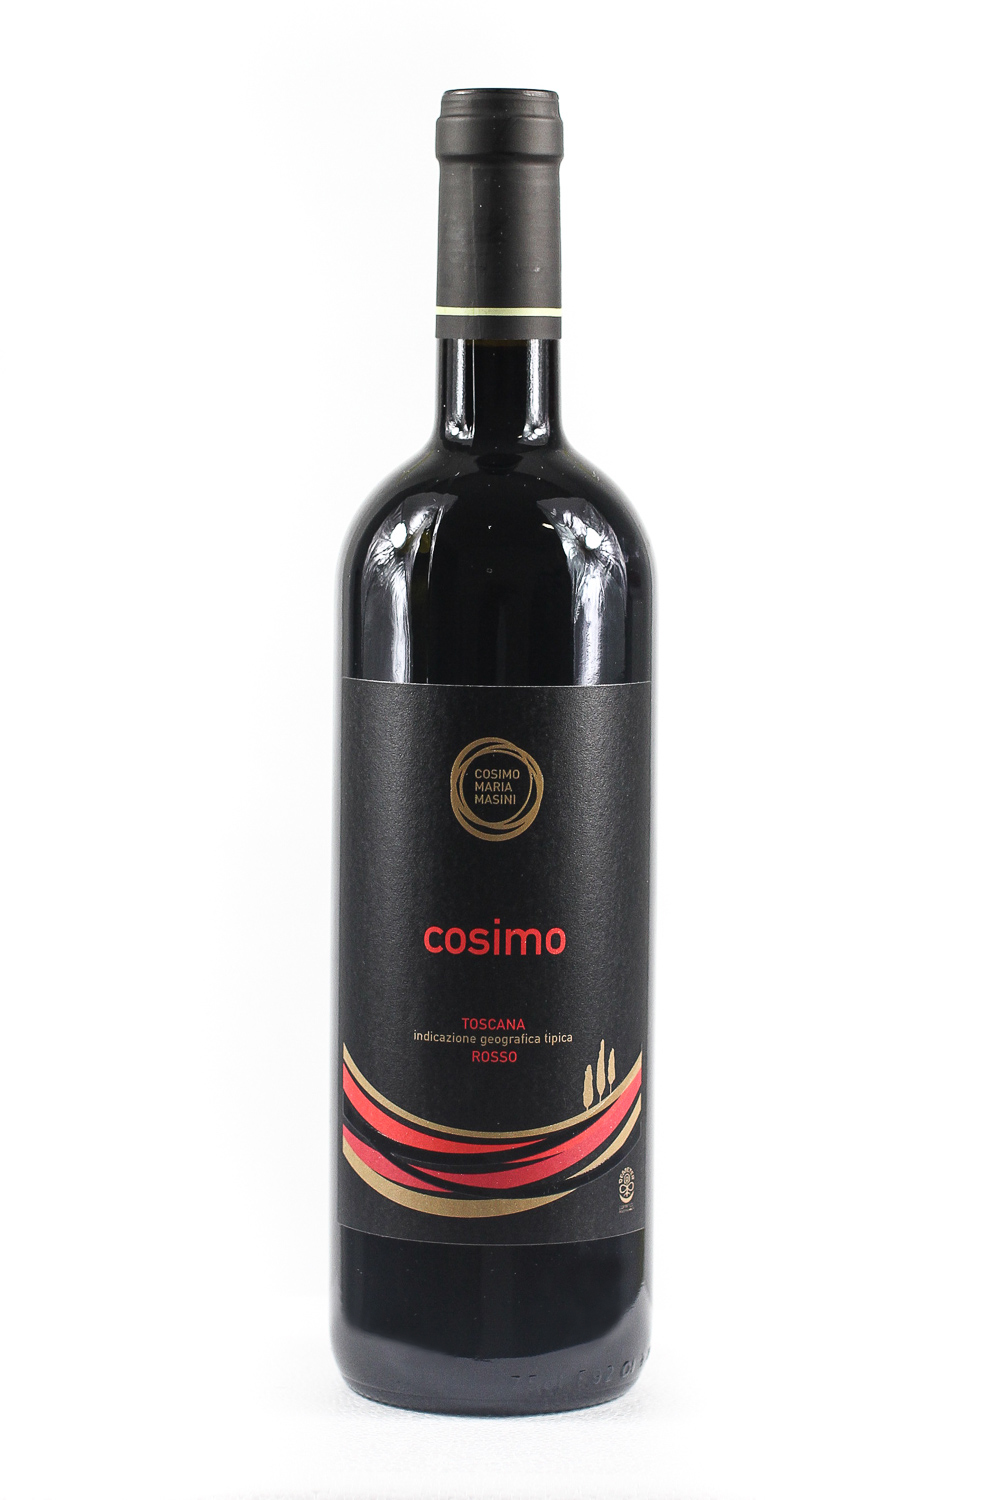 Cosimo IGT Vino Rosso Toscana Cosimo Maria Masini